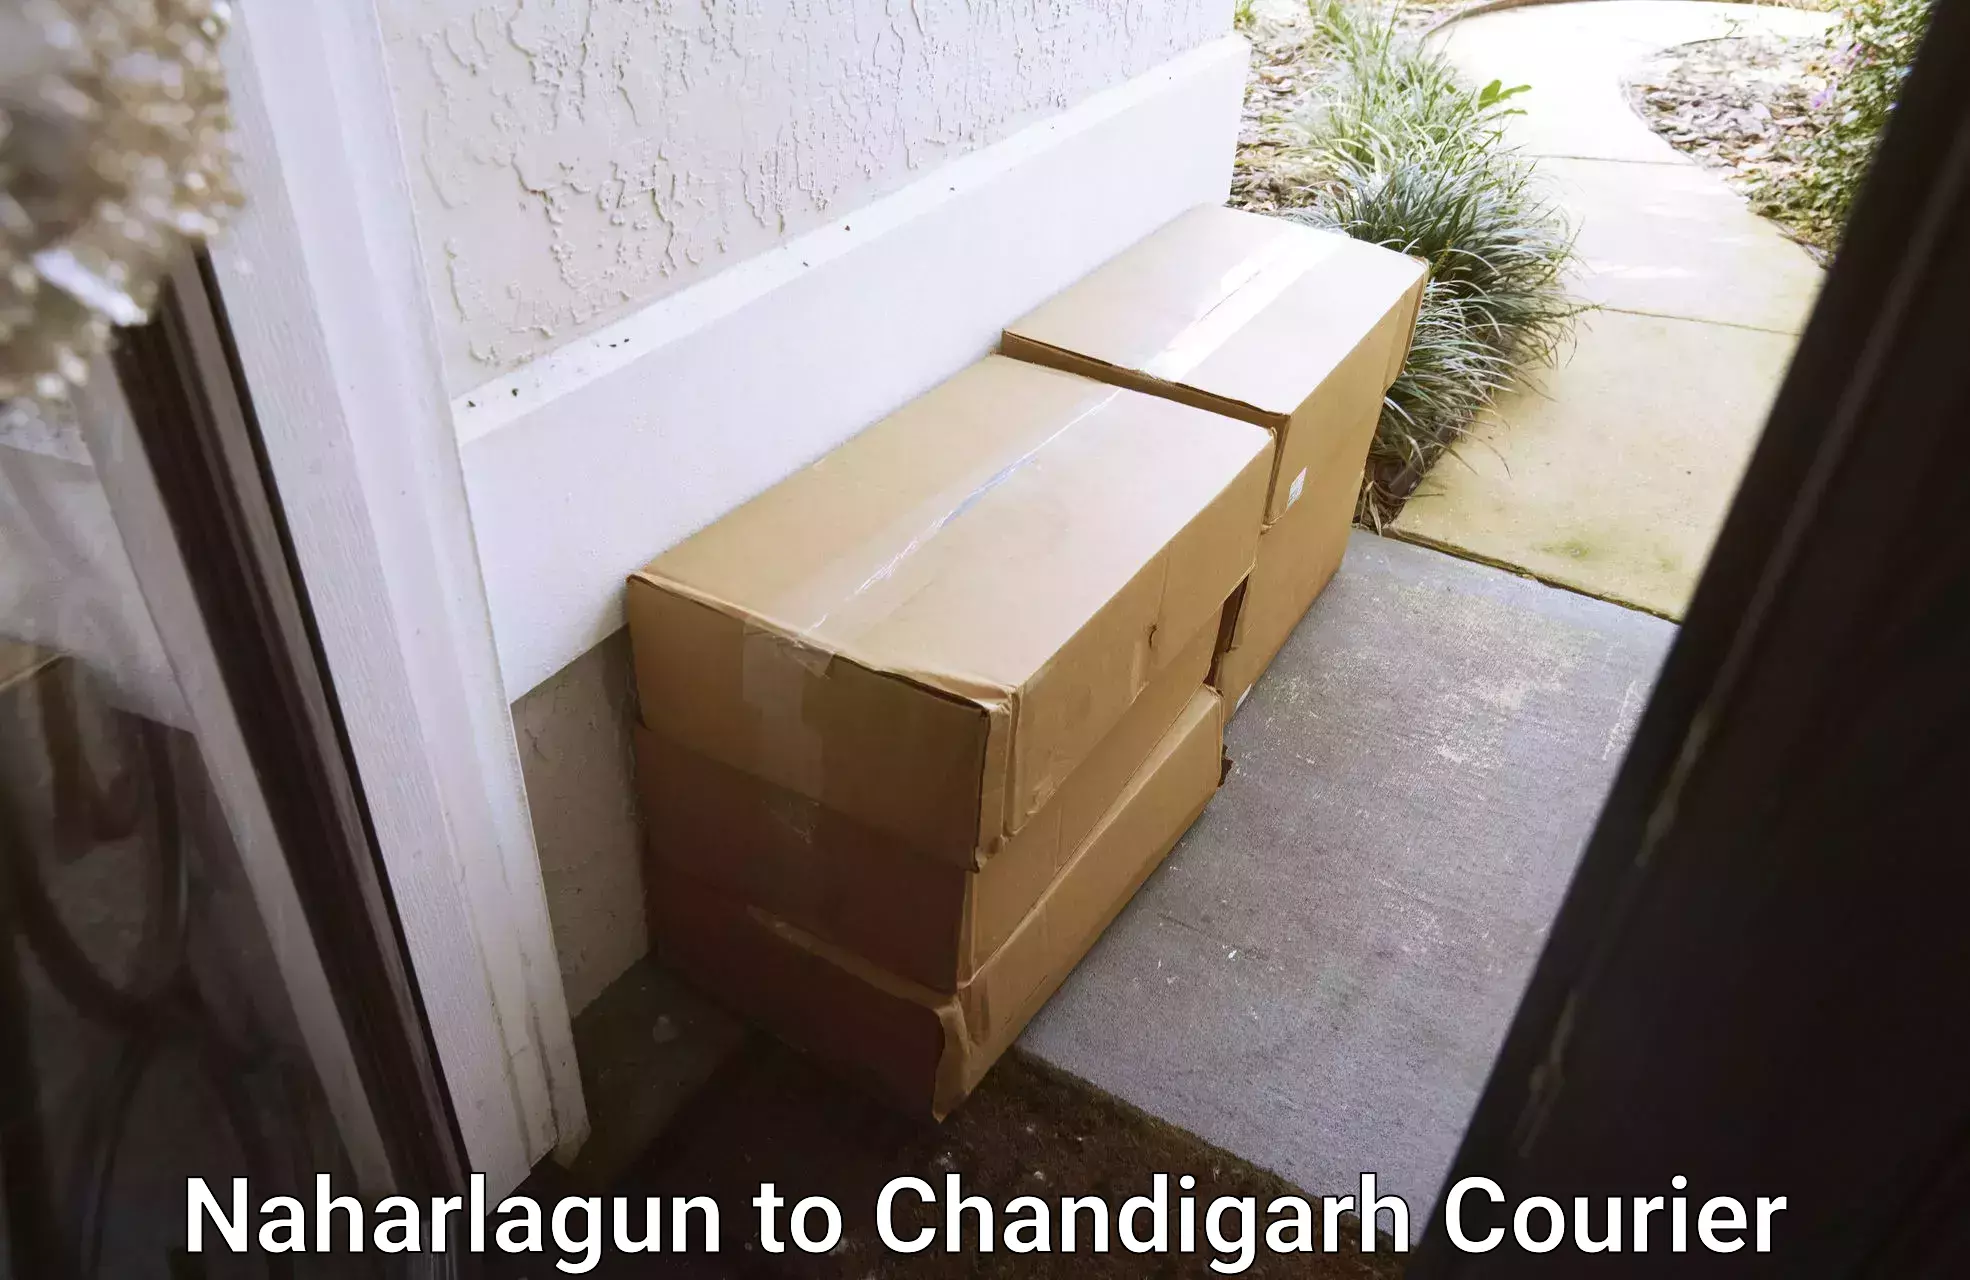 Nationwide delivery network Naharlagun to Chandigarh